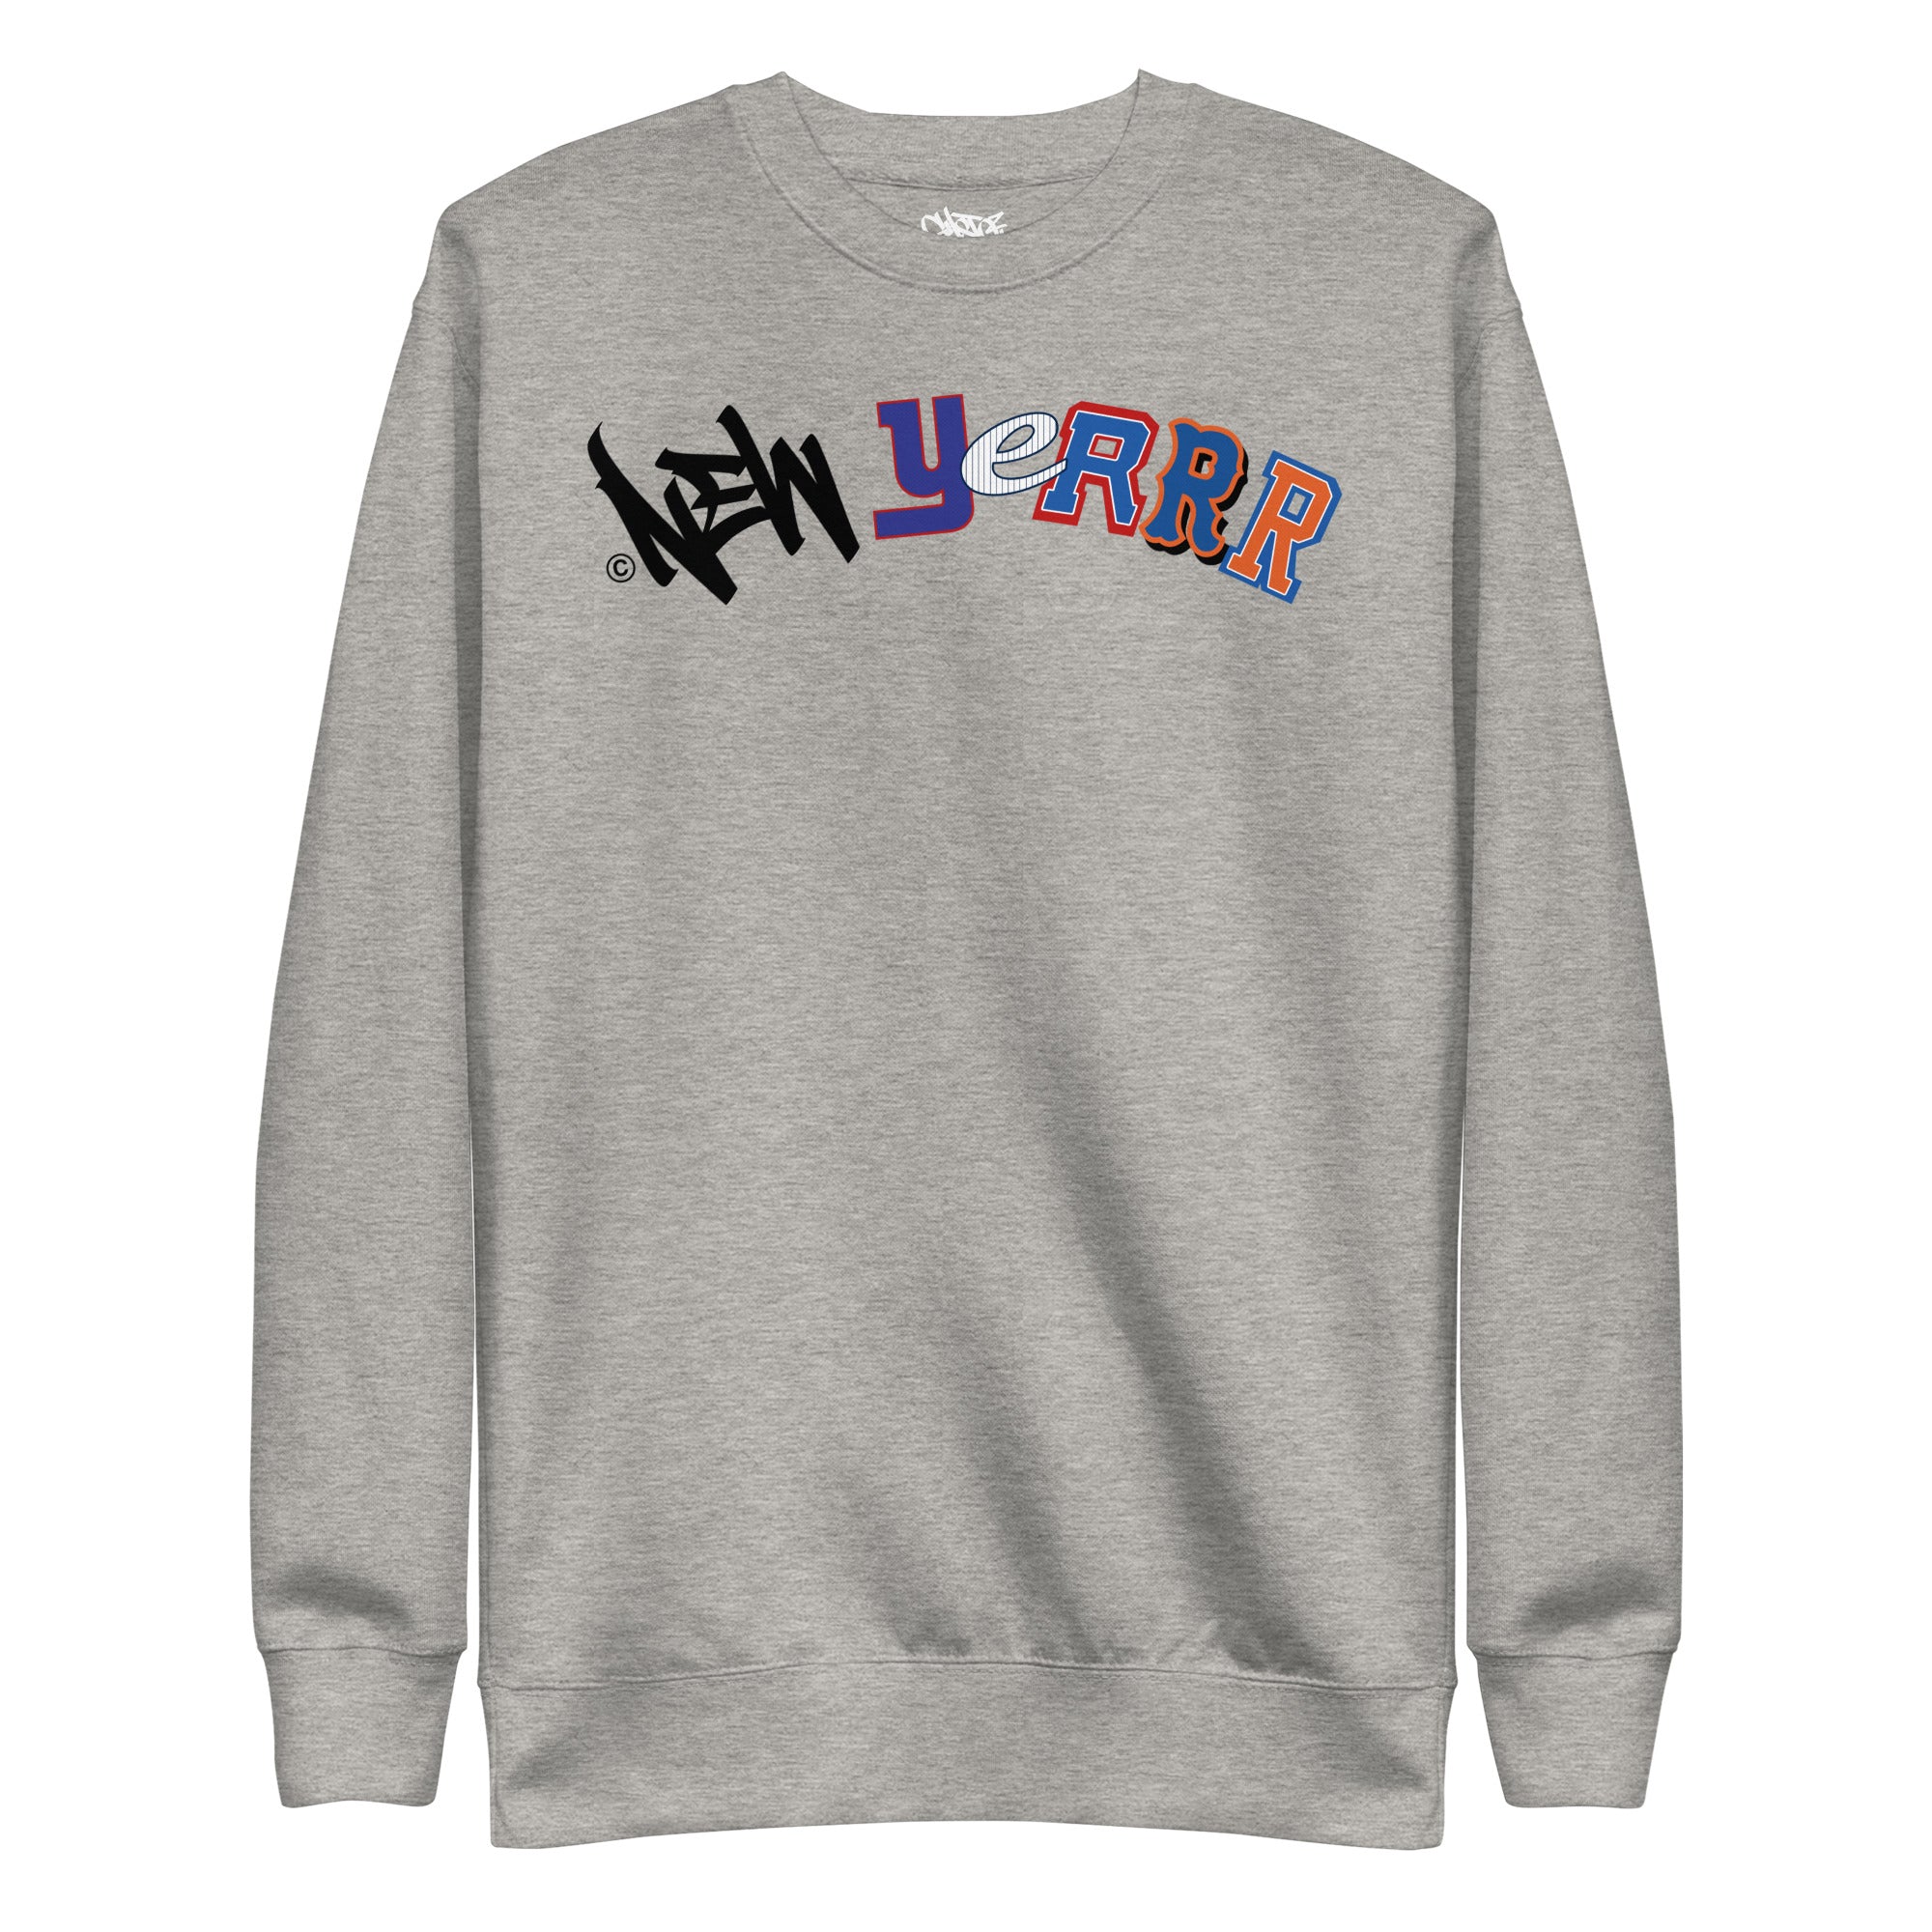 "New Yerrr" Sports Team - Unisex Premium Sweatshirt